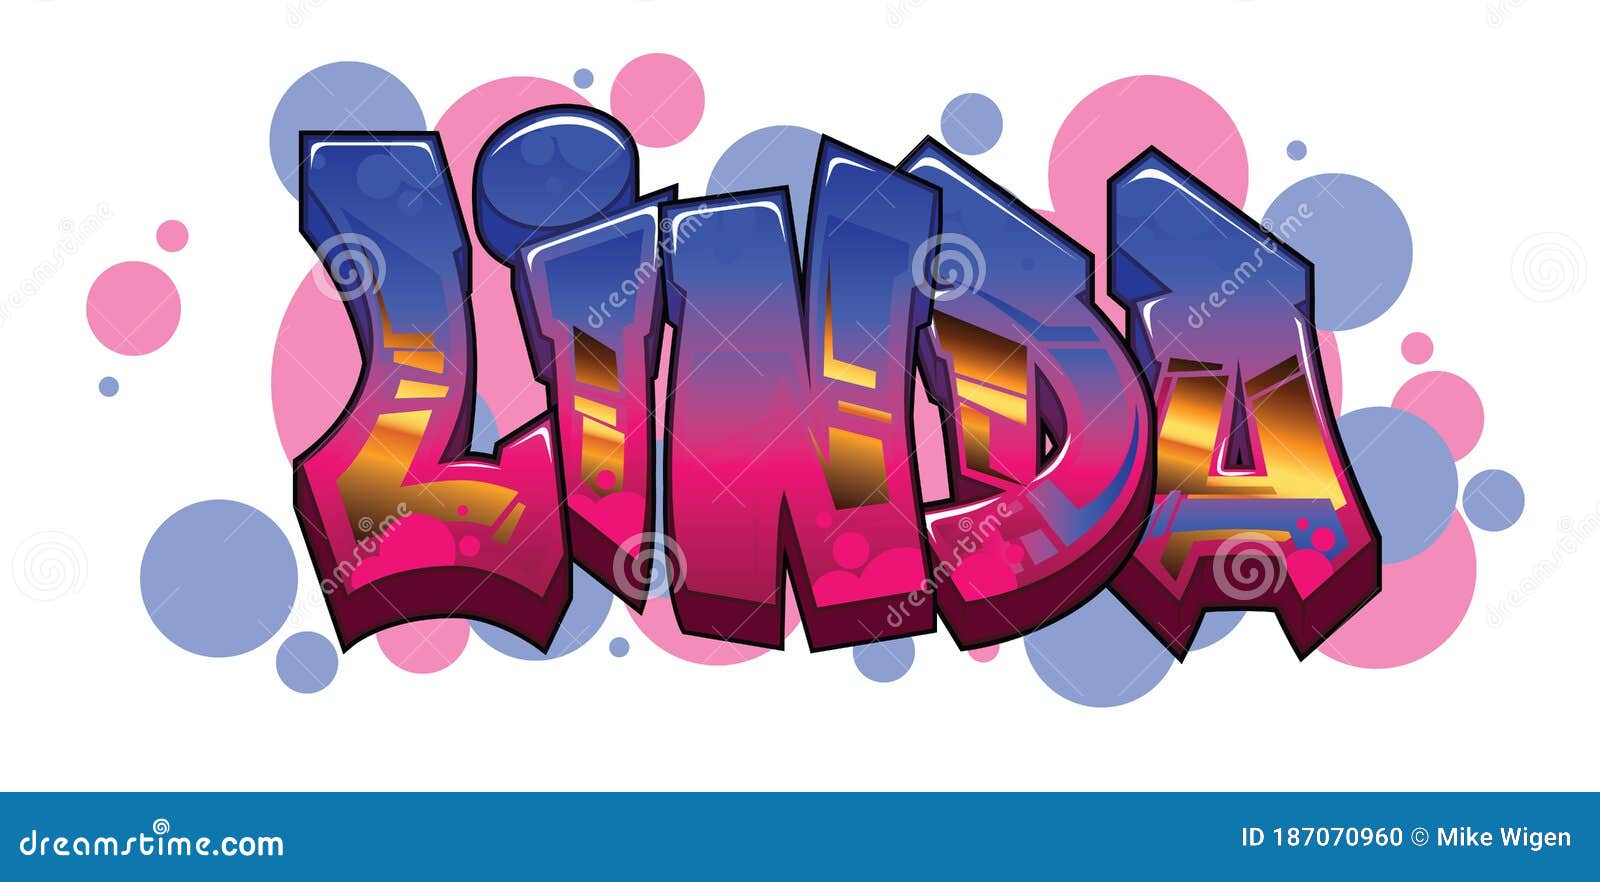 Linda Name Text Graffiti Word Design Stock Vector - Illustration ...